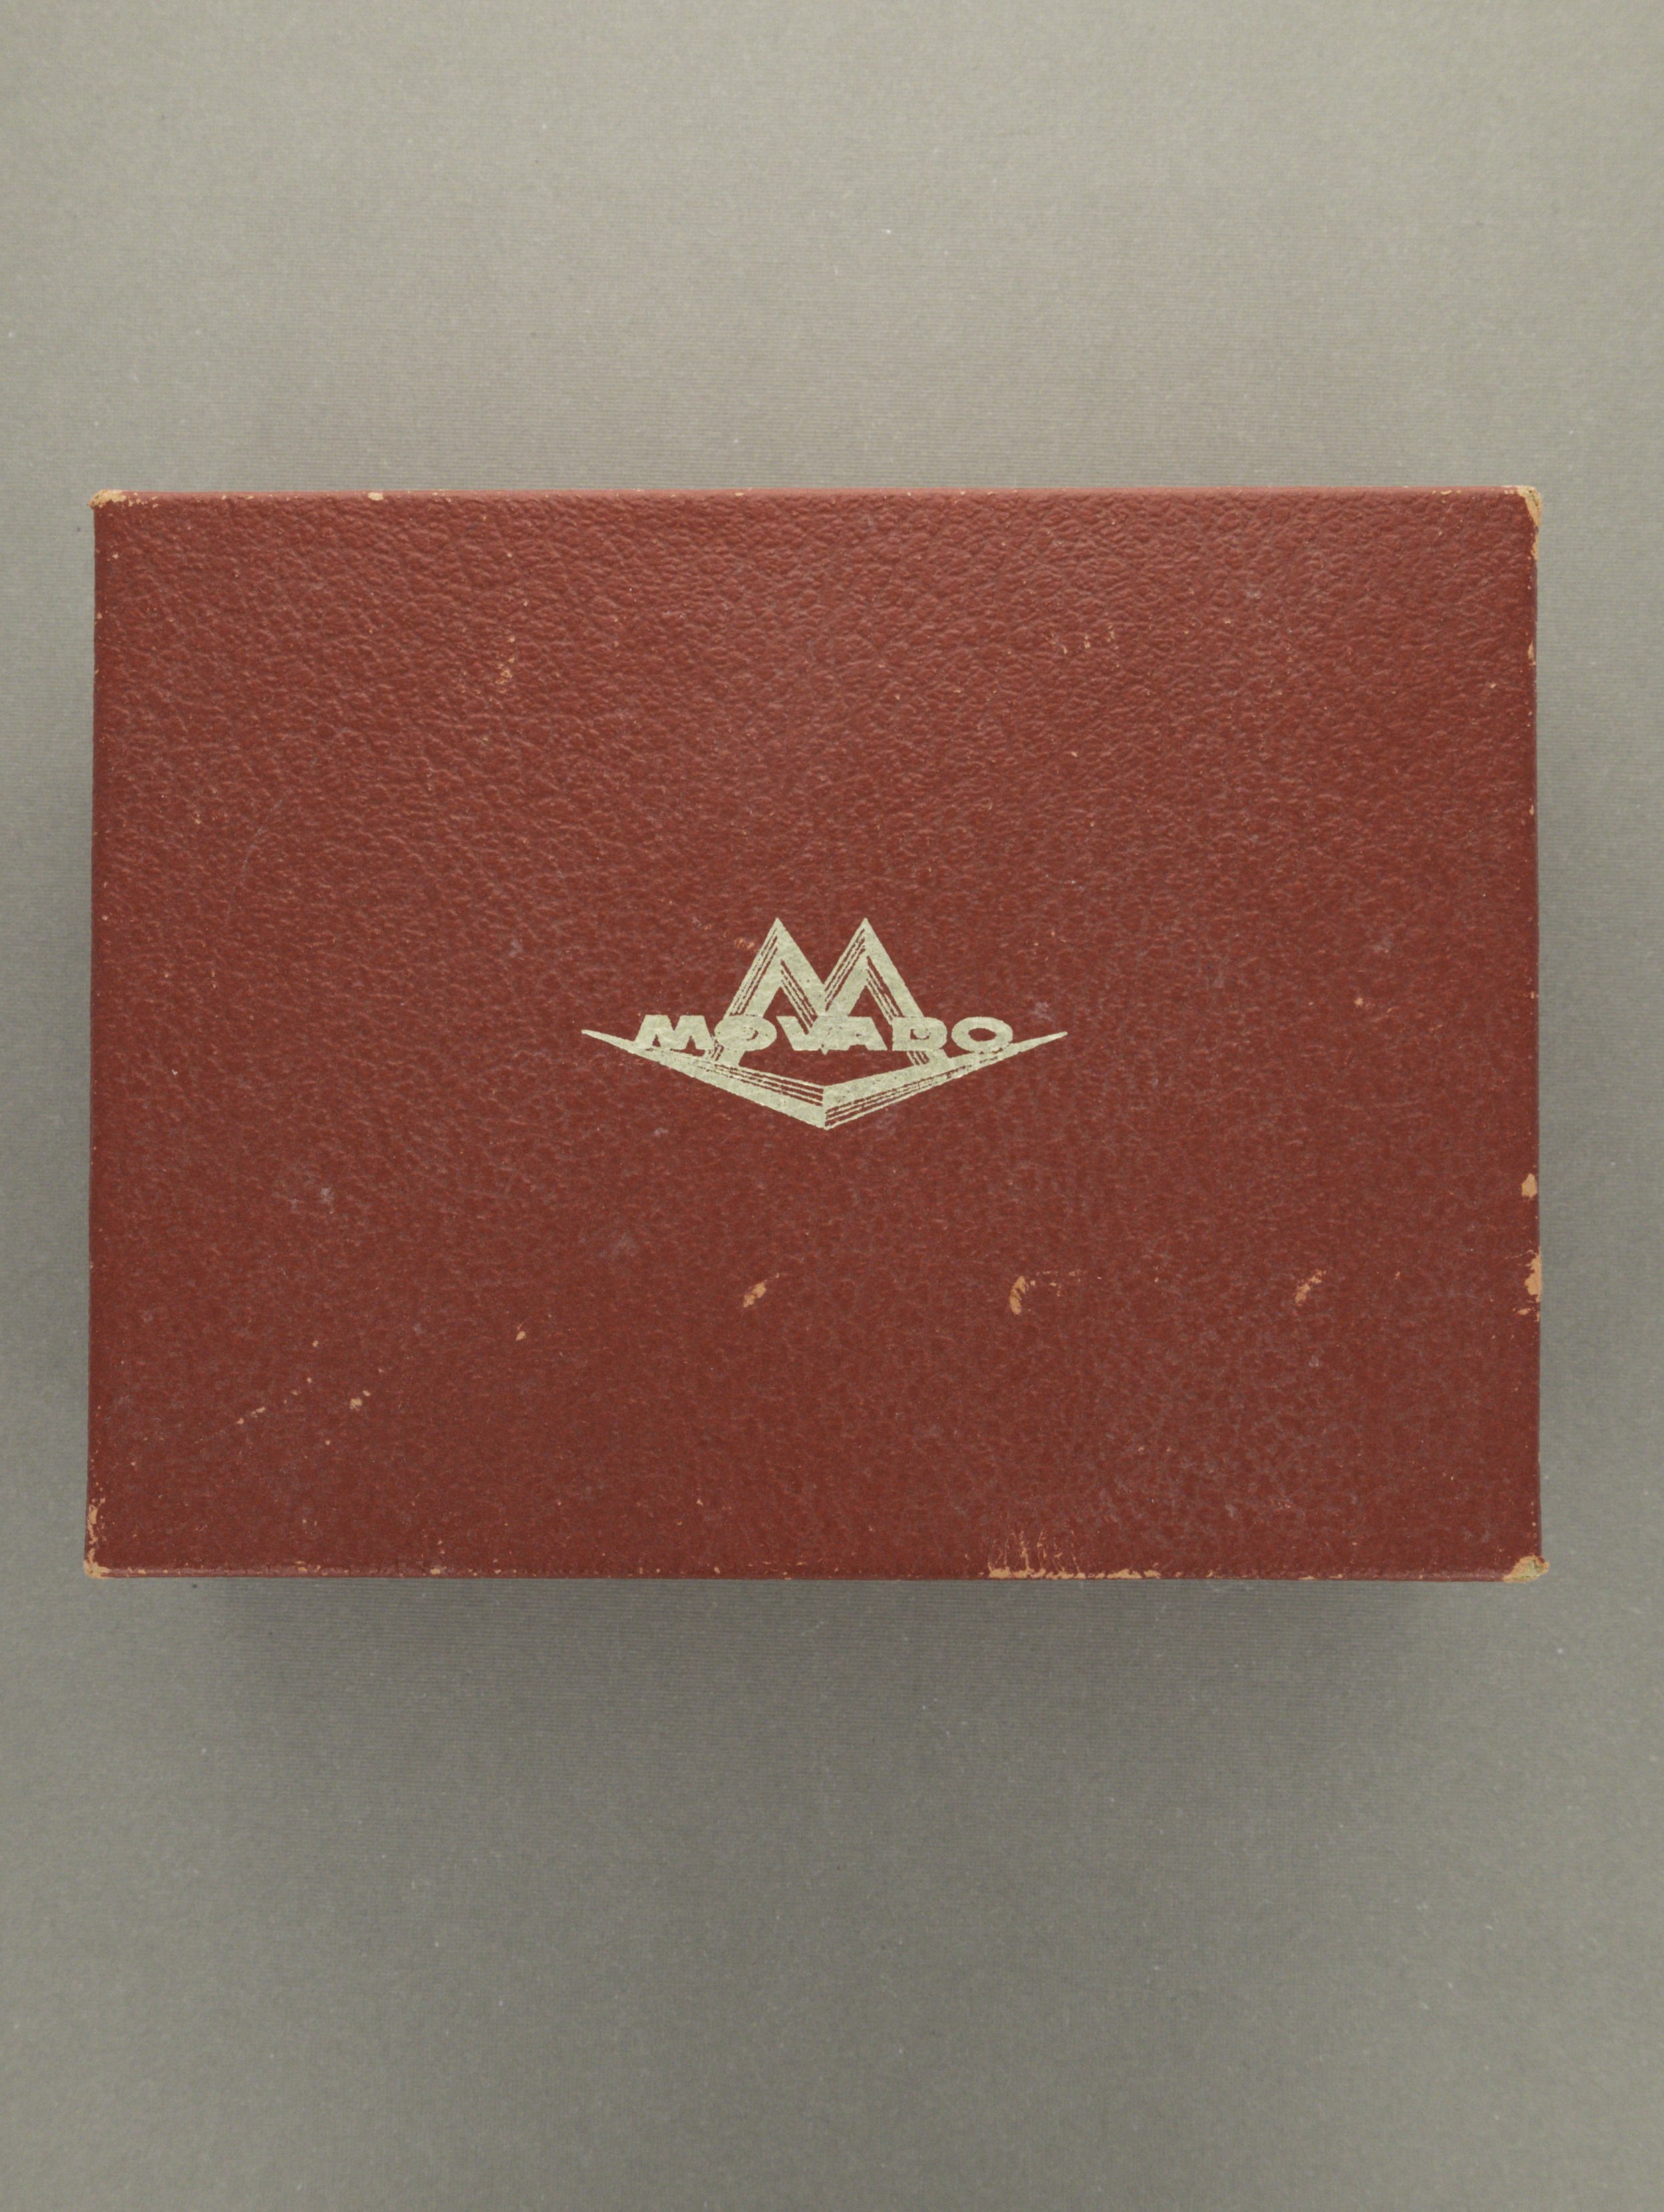 Movado Super Sub Sea Chronograph - Boxes & Papers